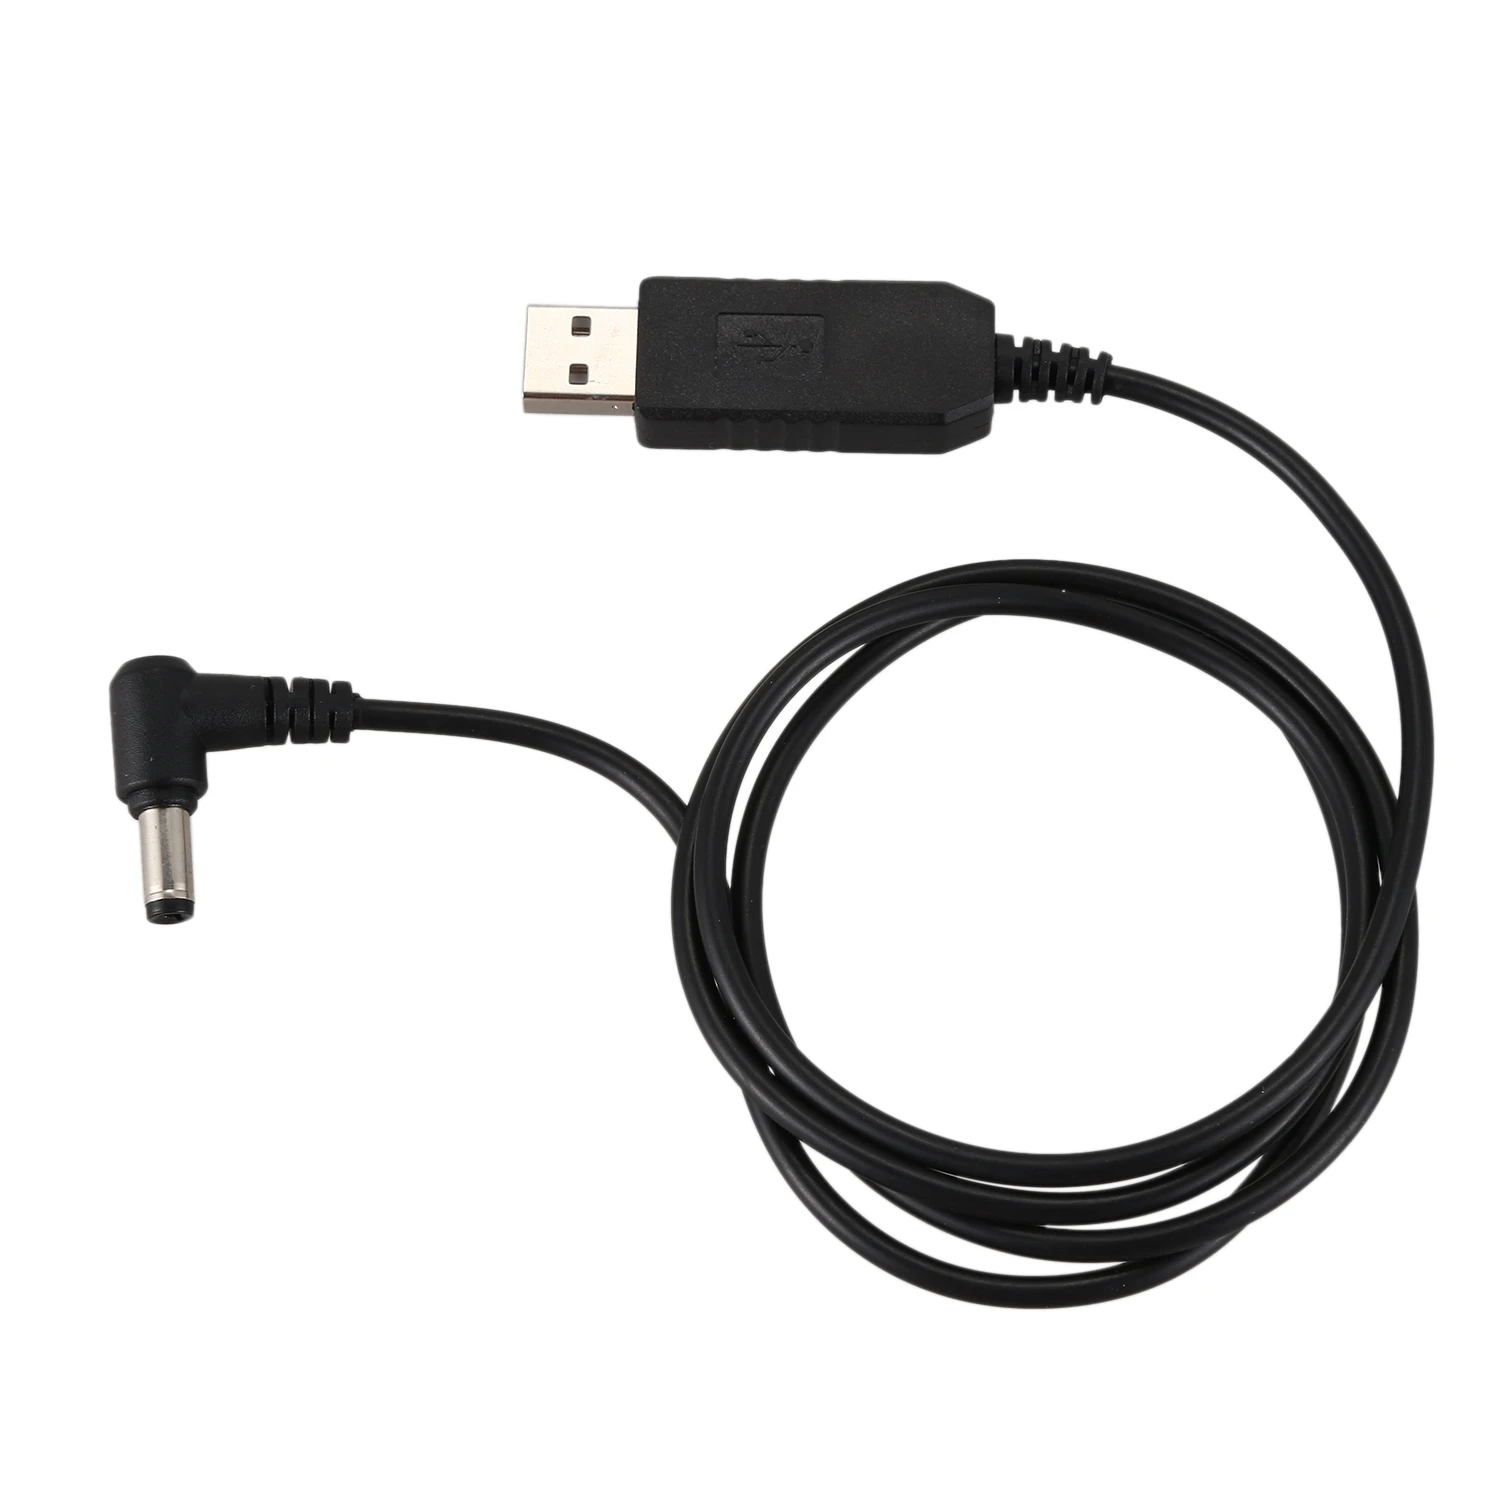 

1 м USB-кабель для зарядки для Baofeng Pofung bf-uv5r/uv5ra/uv5rb/uv5re радио